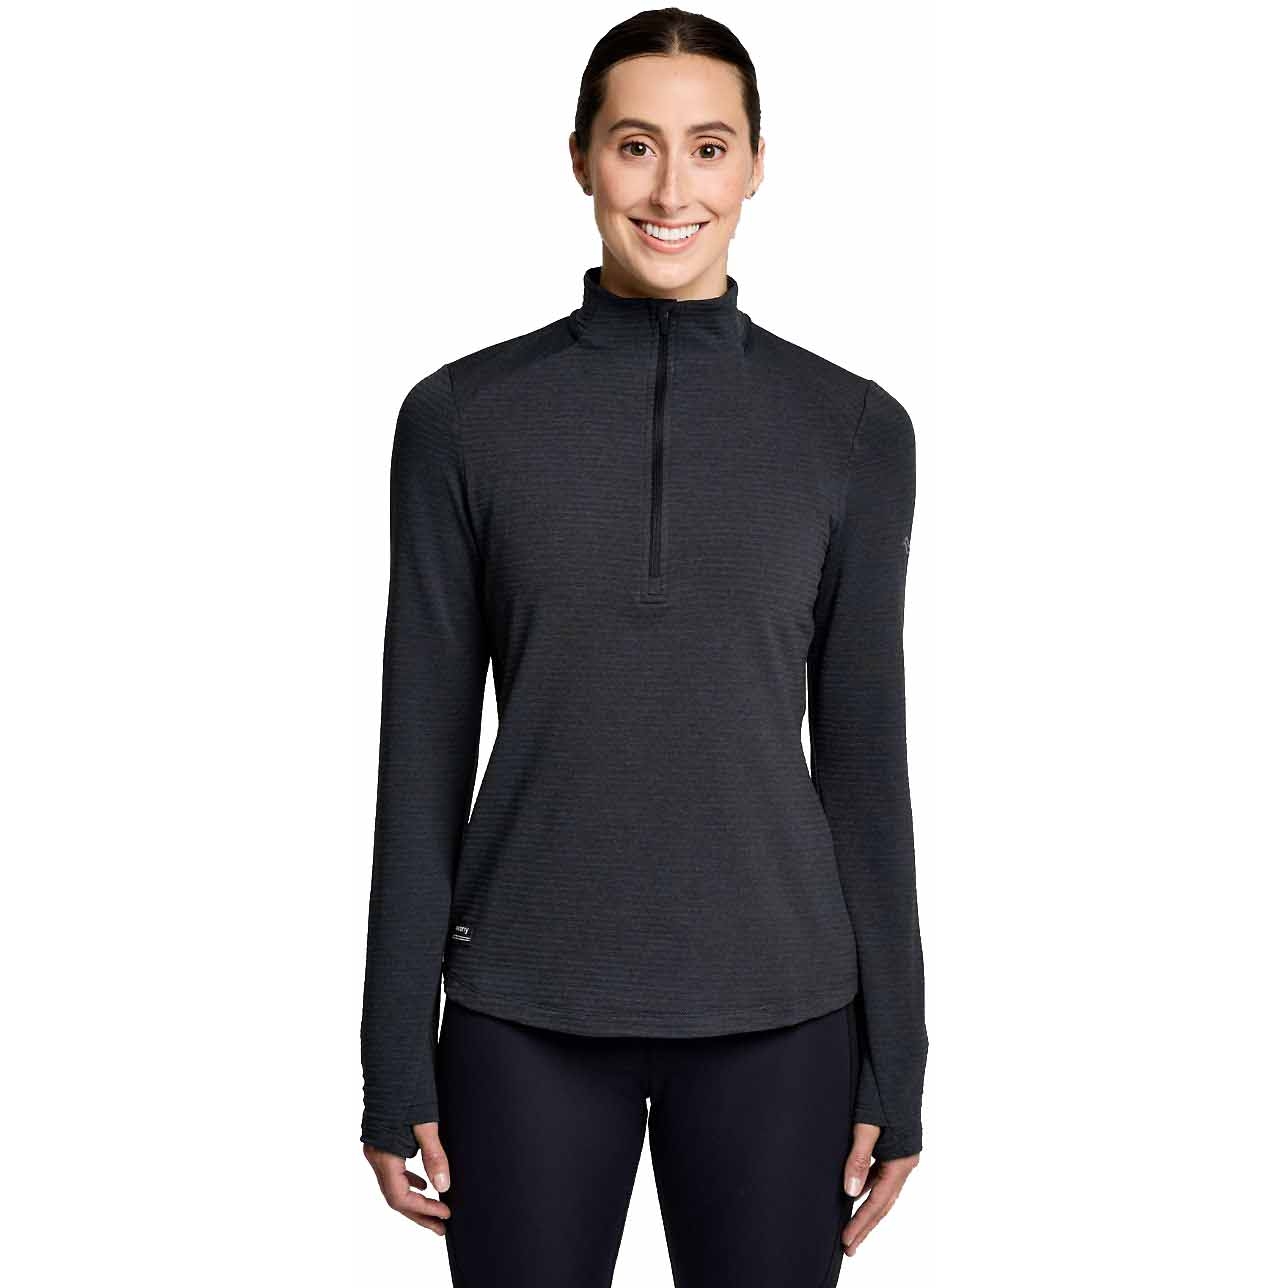 Picture of Saucony Triumph 3D 1/2 Zip Long Sleeve Shirt Women - black heather